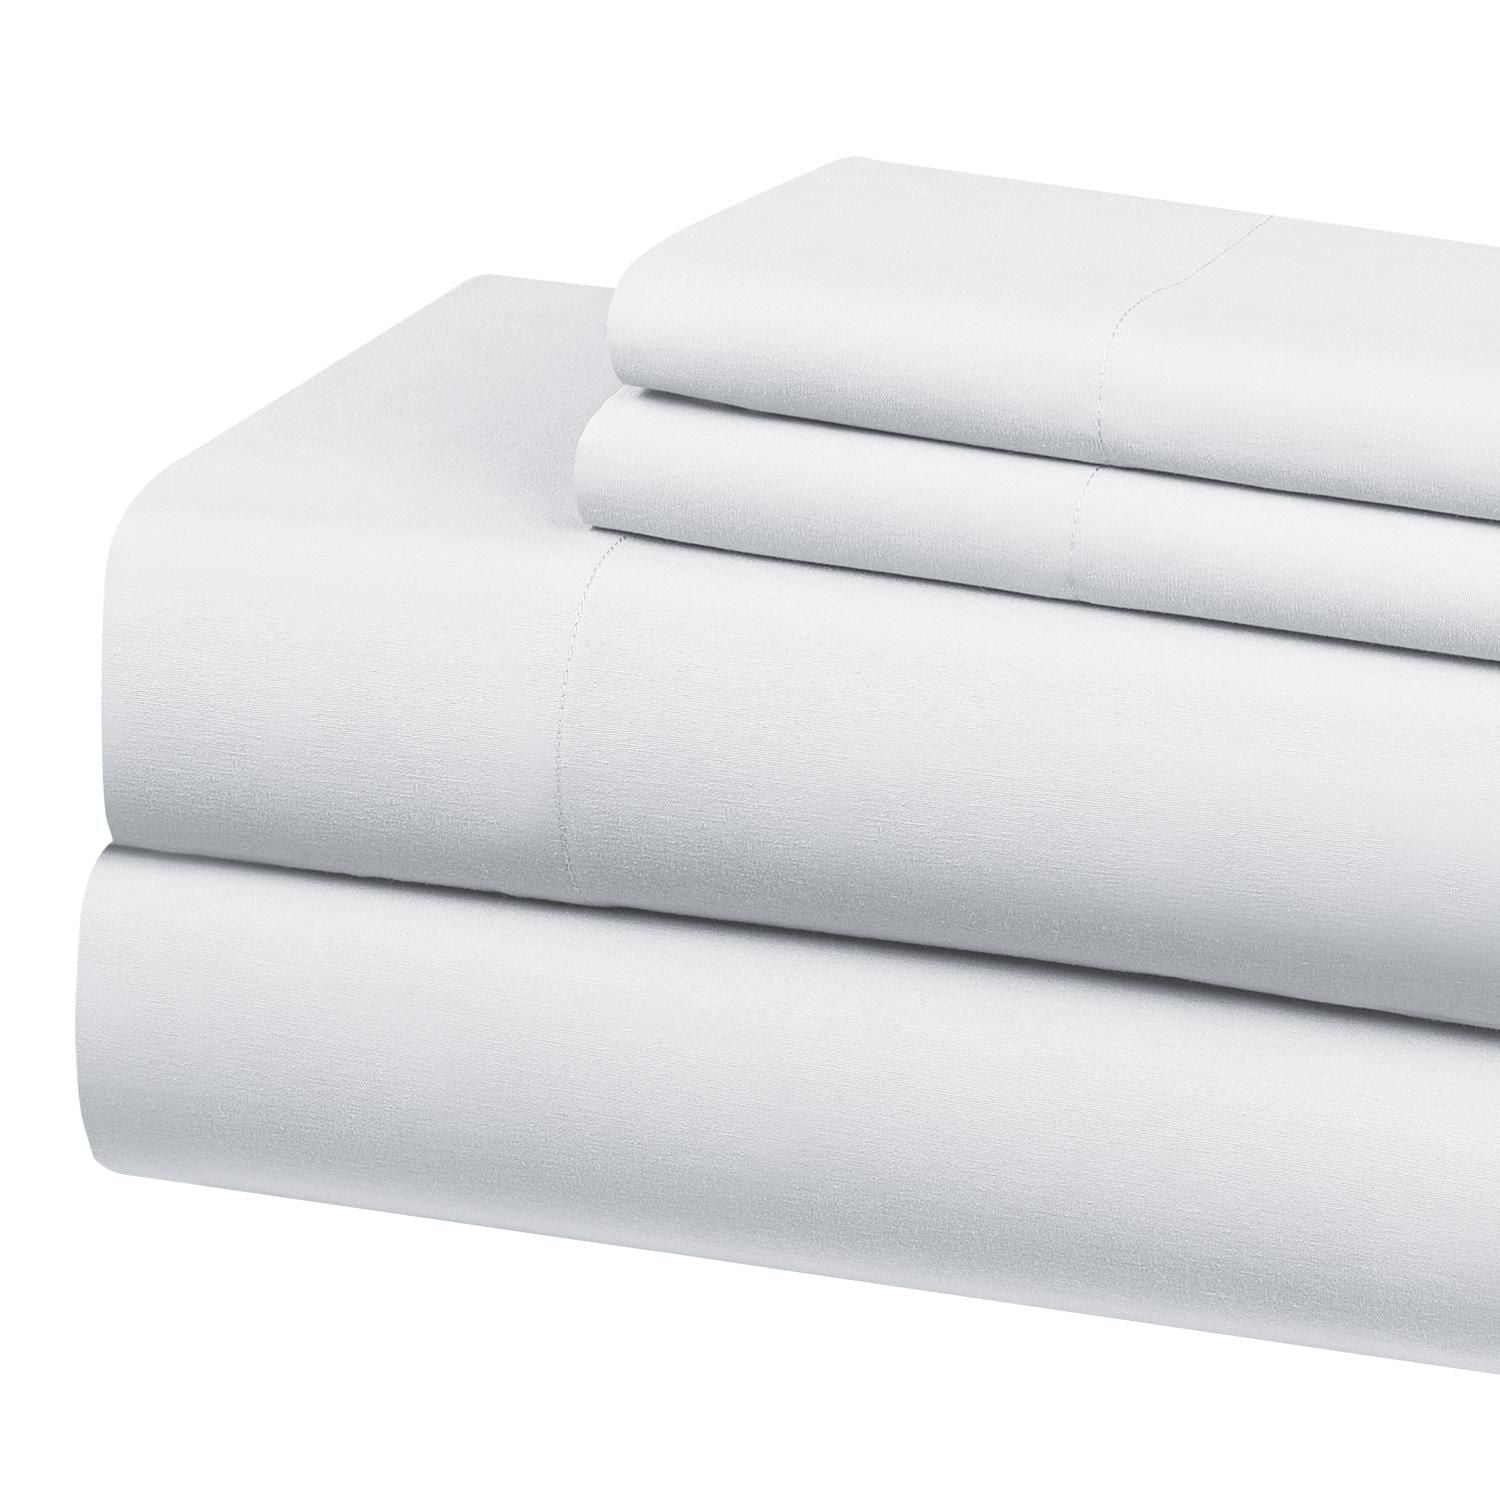 MAINSTAYS 250 Thread Count Cotton Rich White Sheet Set 